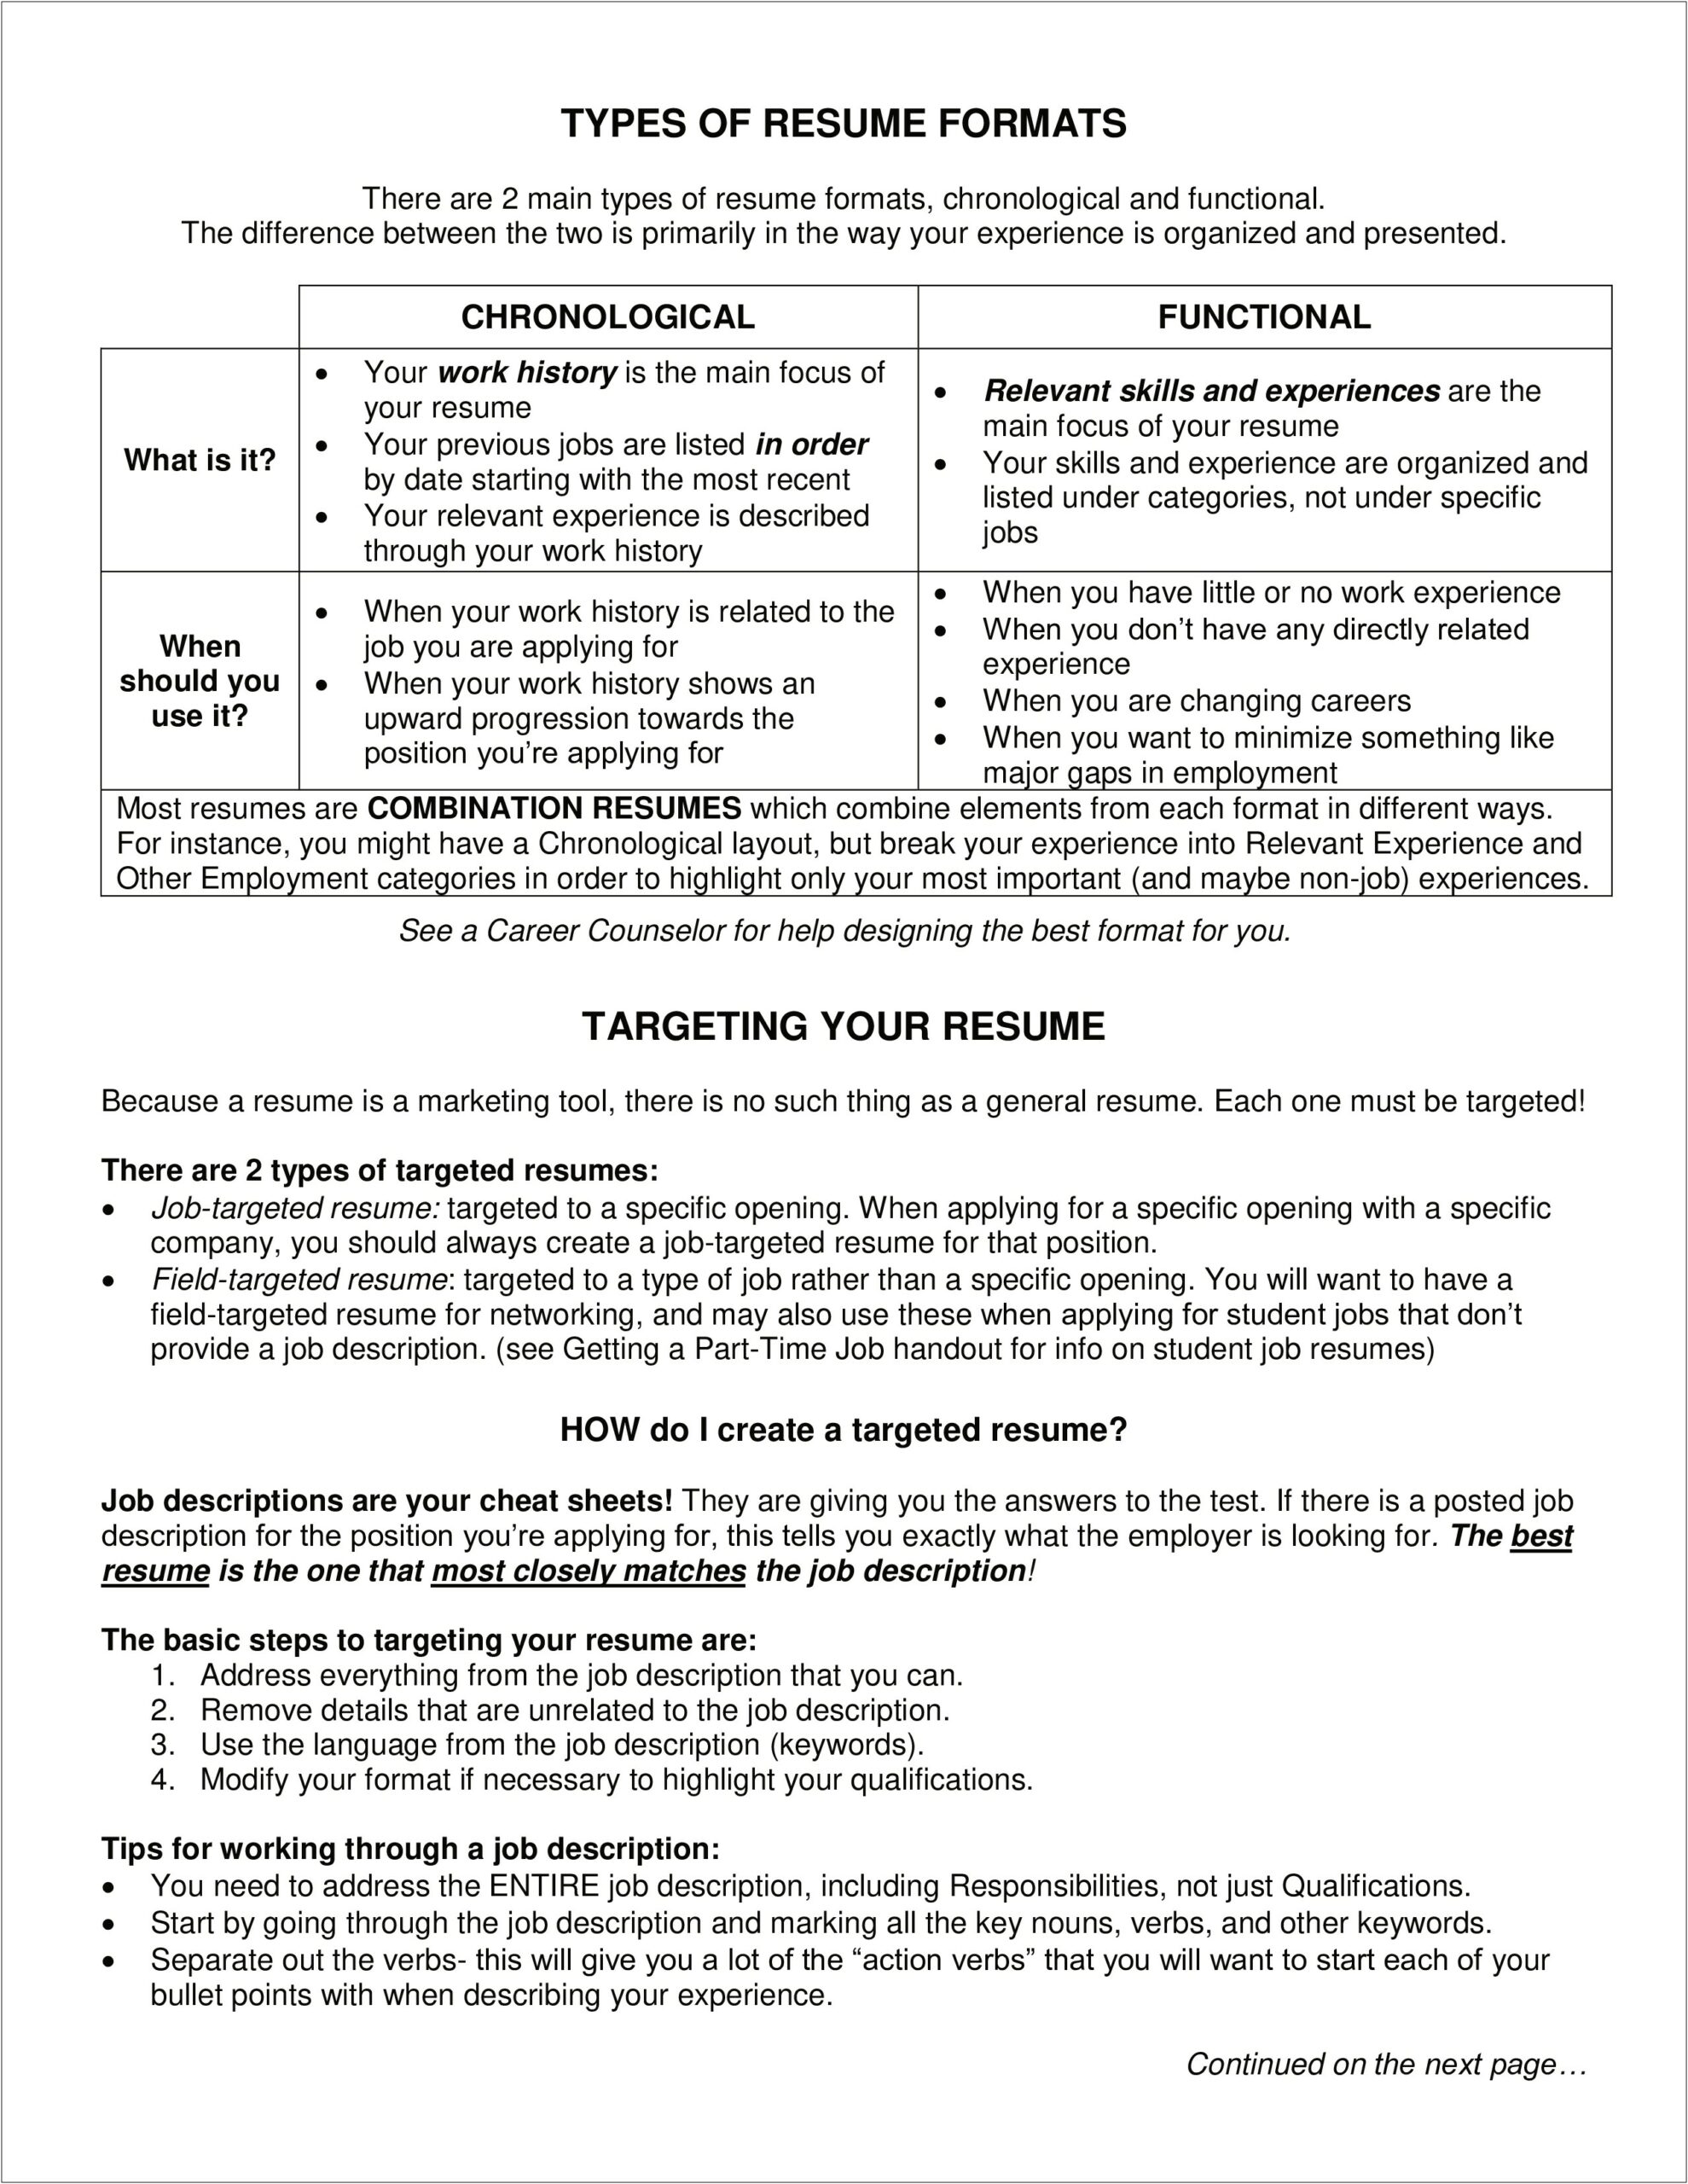 Compare Your Resume To Job Description